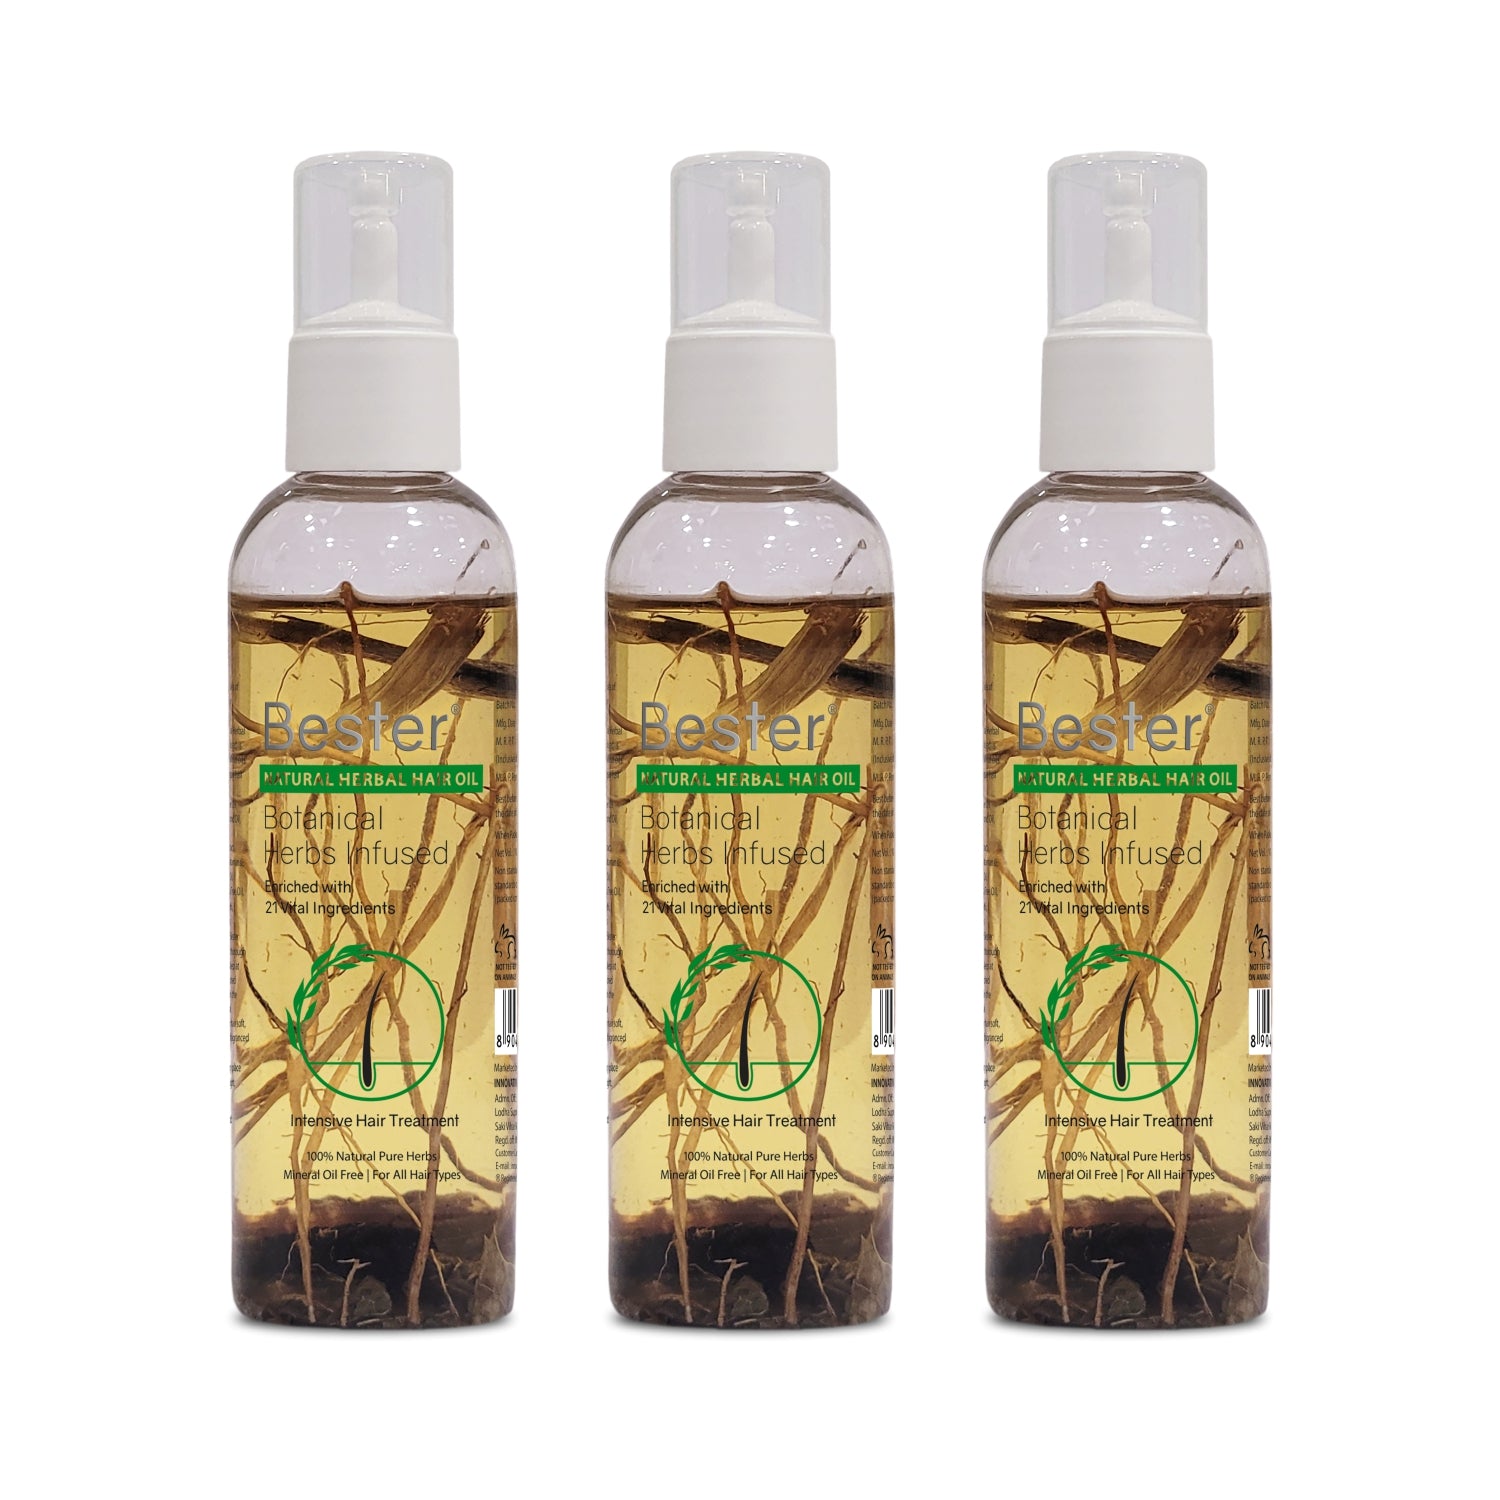 Bester Natural Herbal Hair Oil (120 ml)